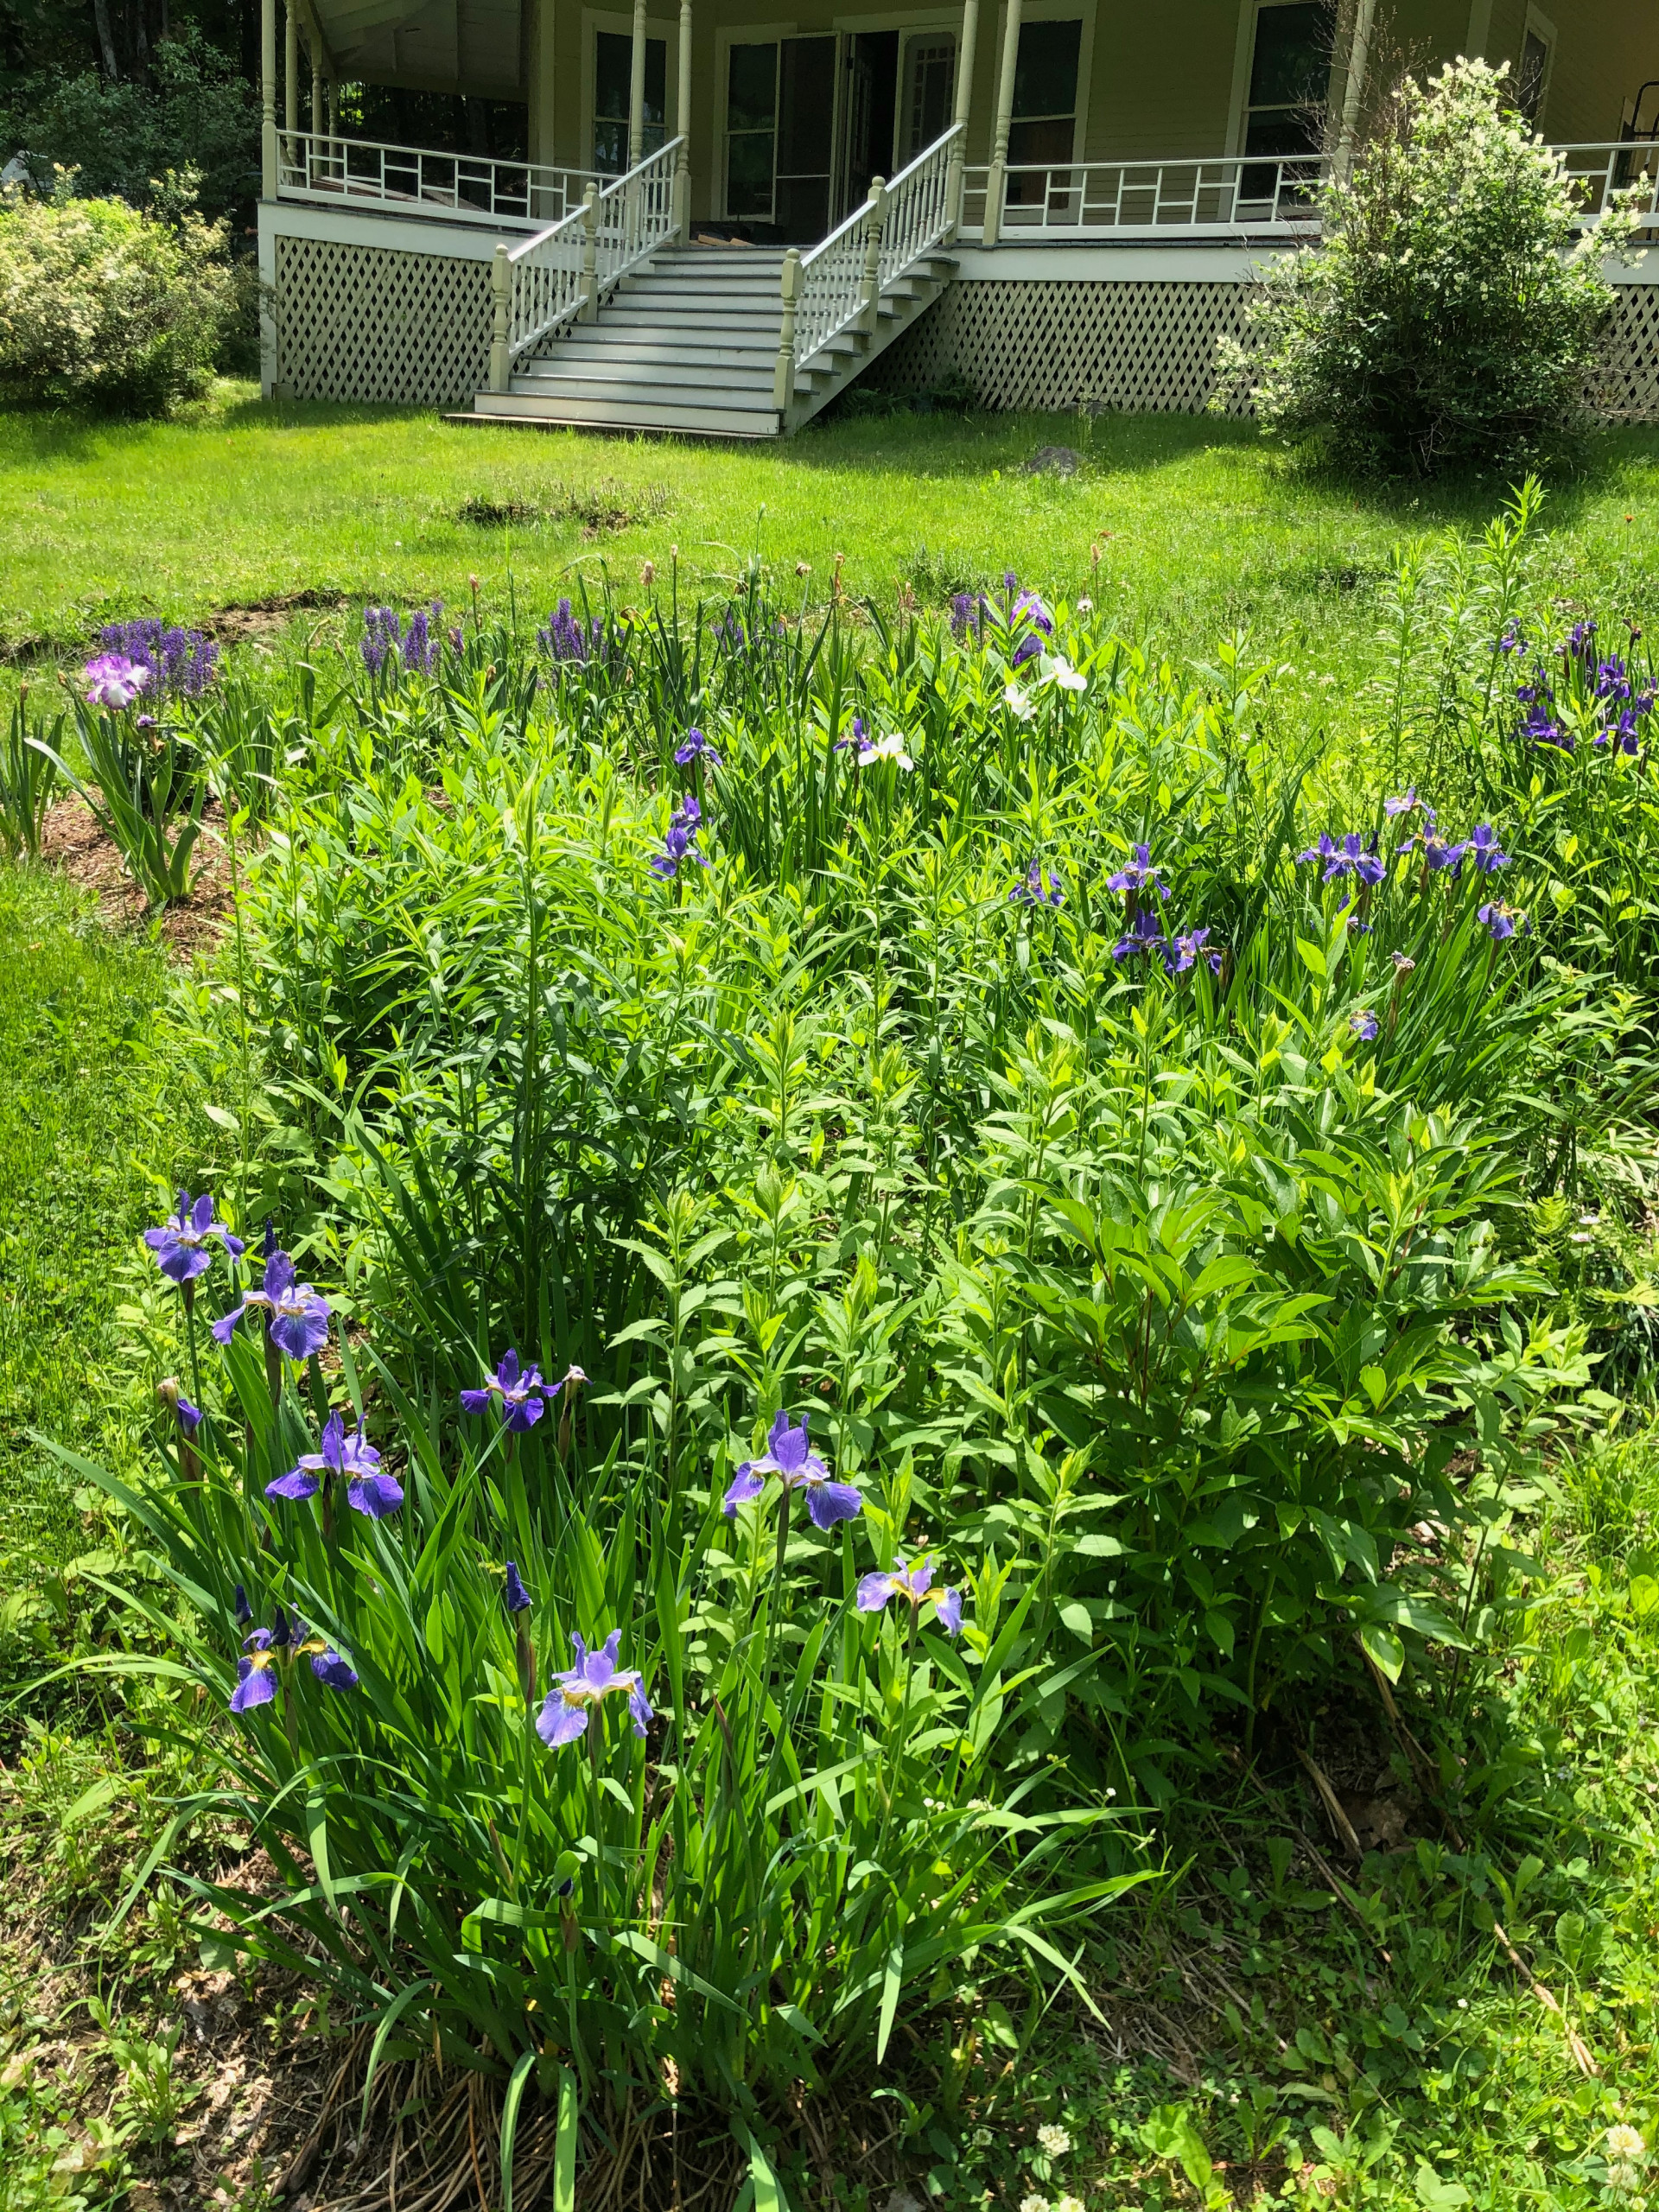 Iris blooming in late spring